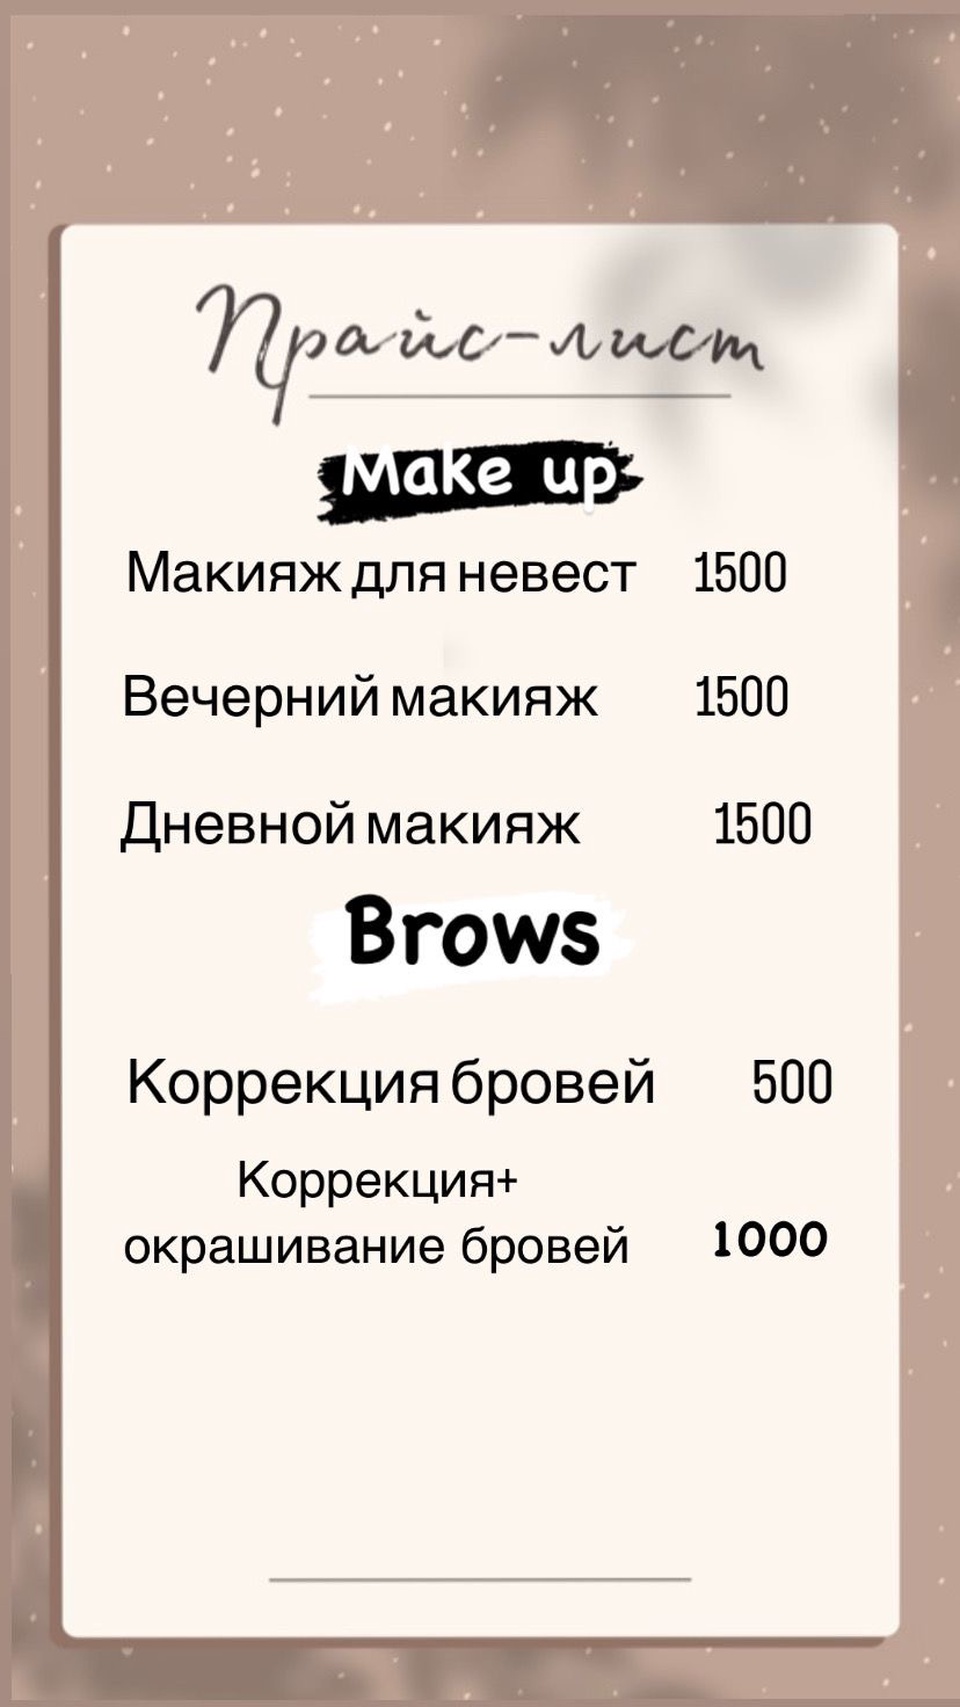 Brows_Raichka - Пятигорск